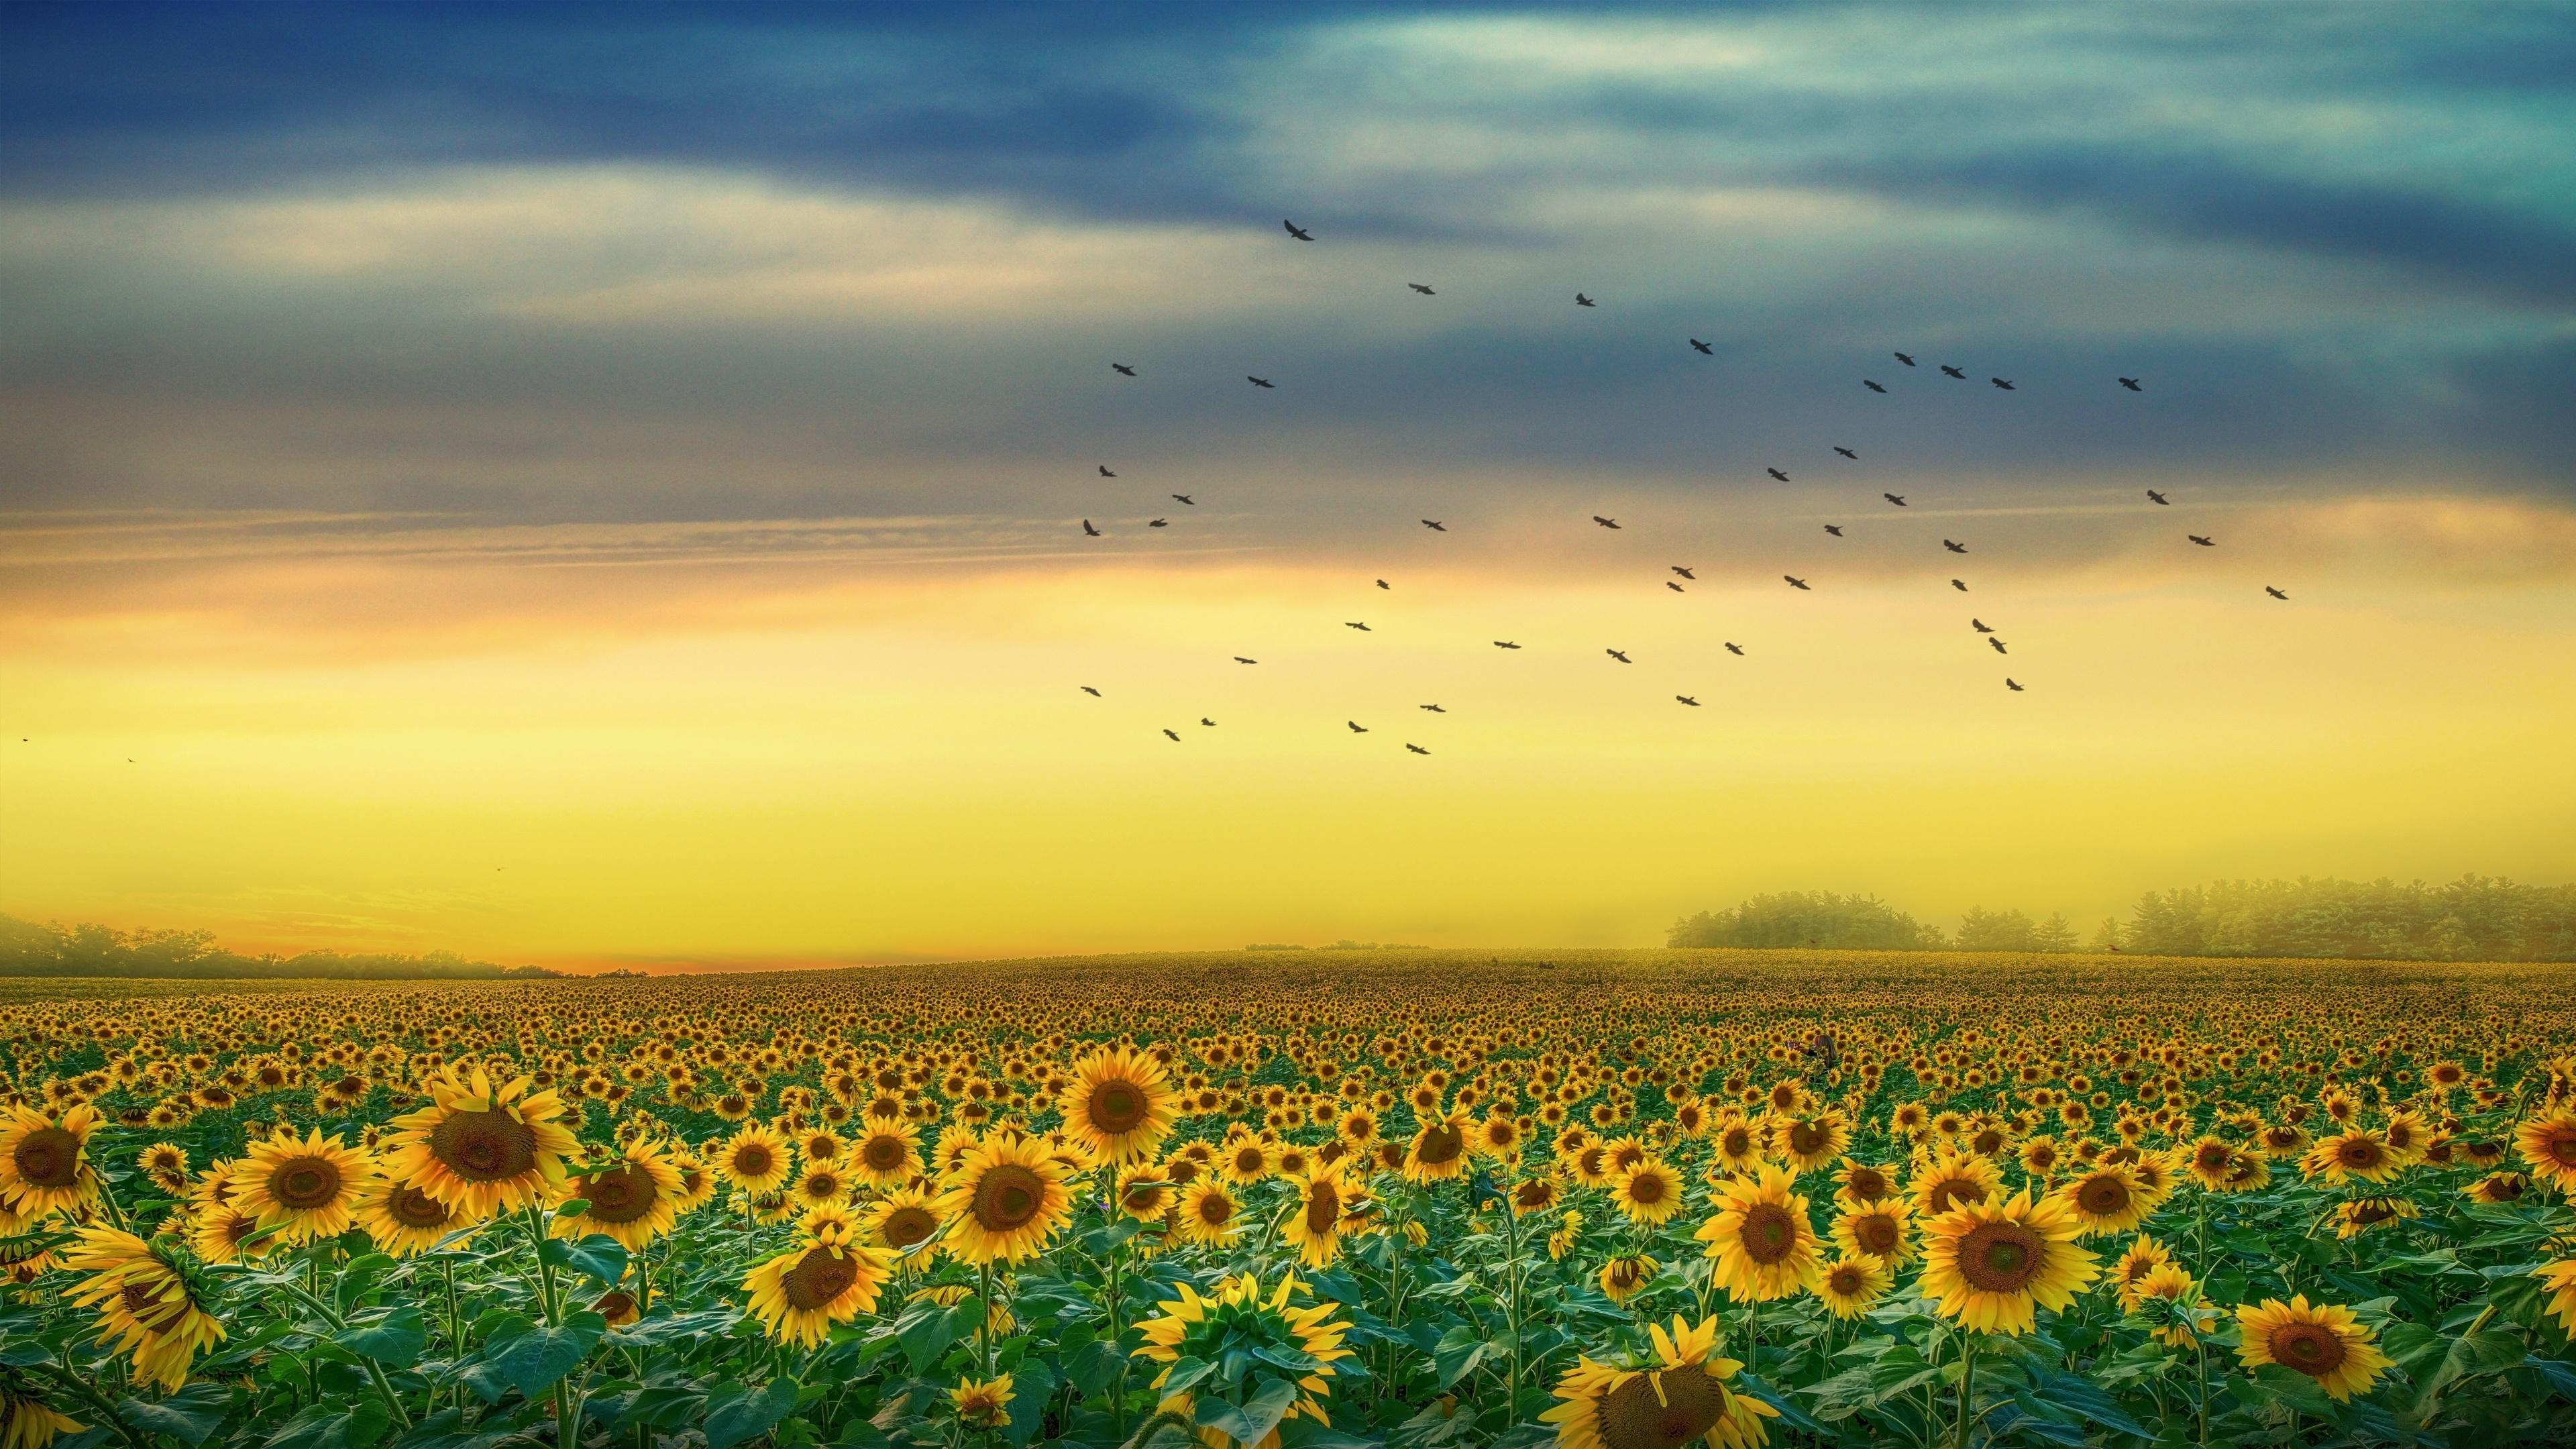 Sunflower Field at Sunset 4k Ultra HD Wallpaper. Background Image